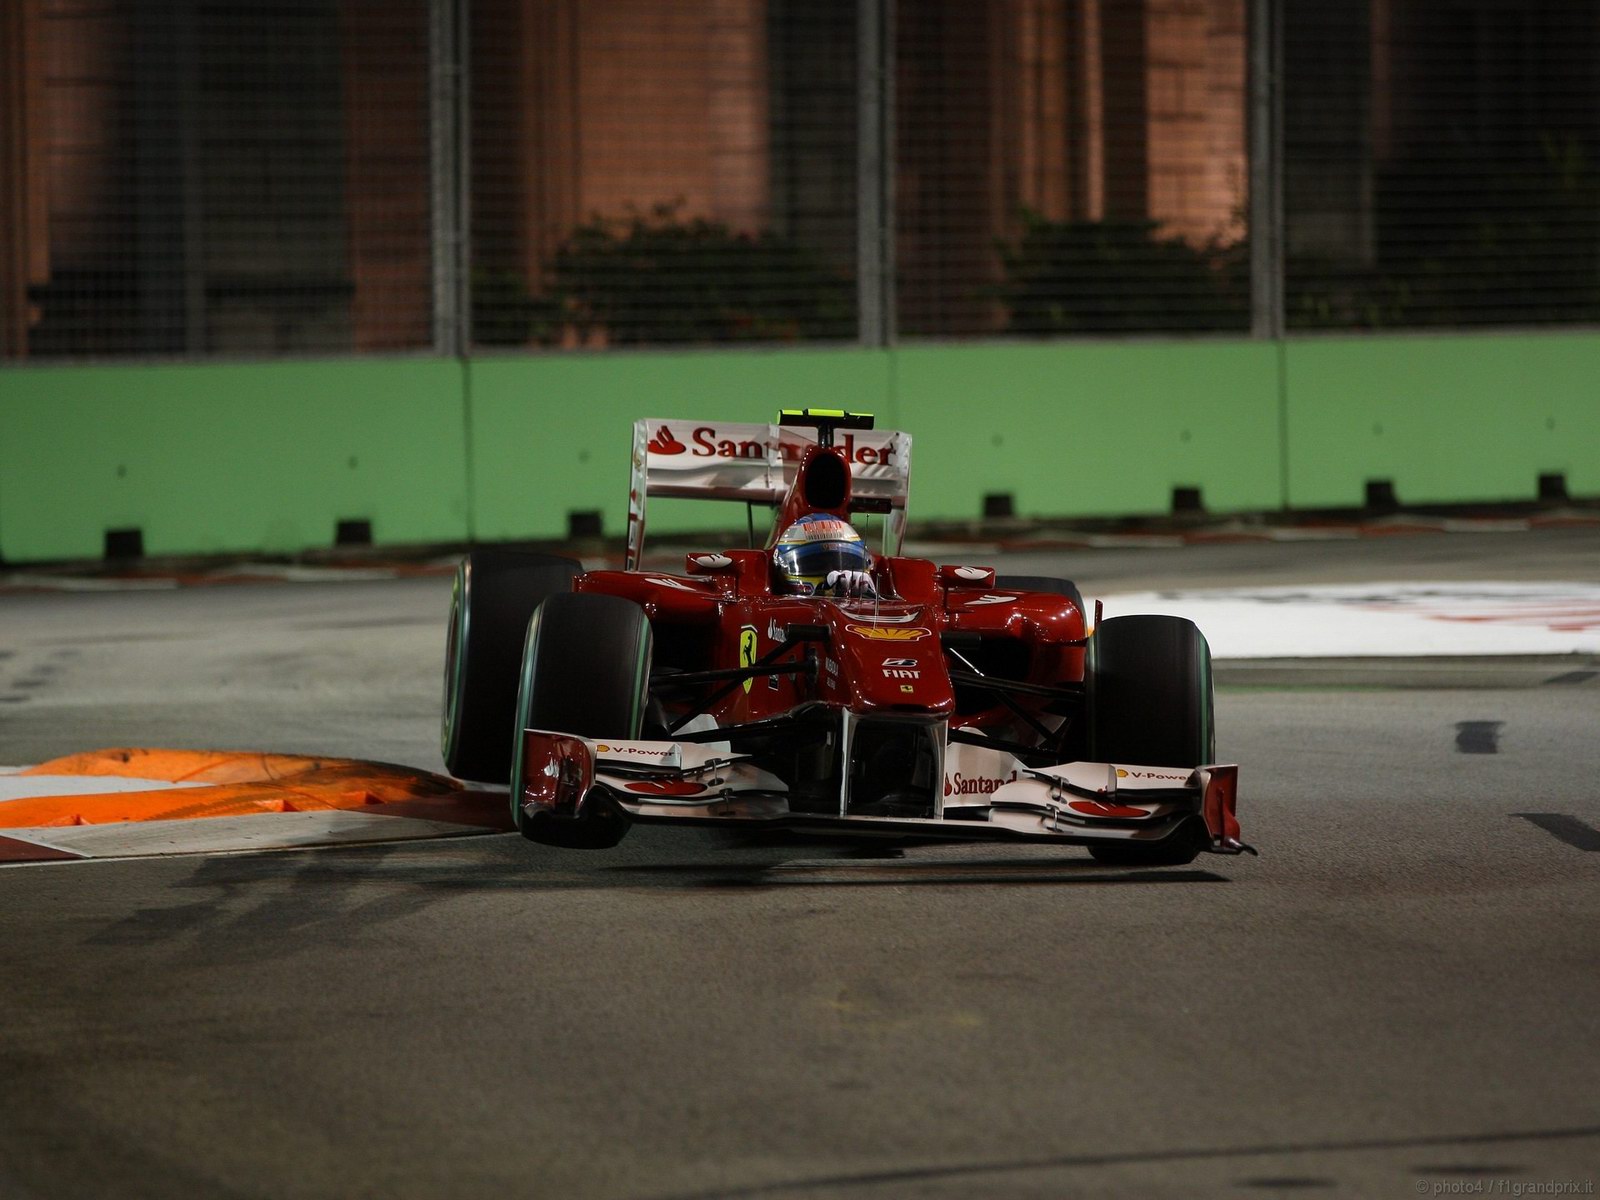 pojazdy - formula1 - gp_singapore_wallpapers_000108